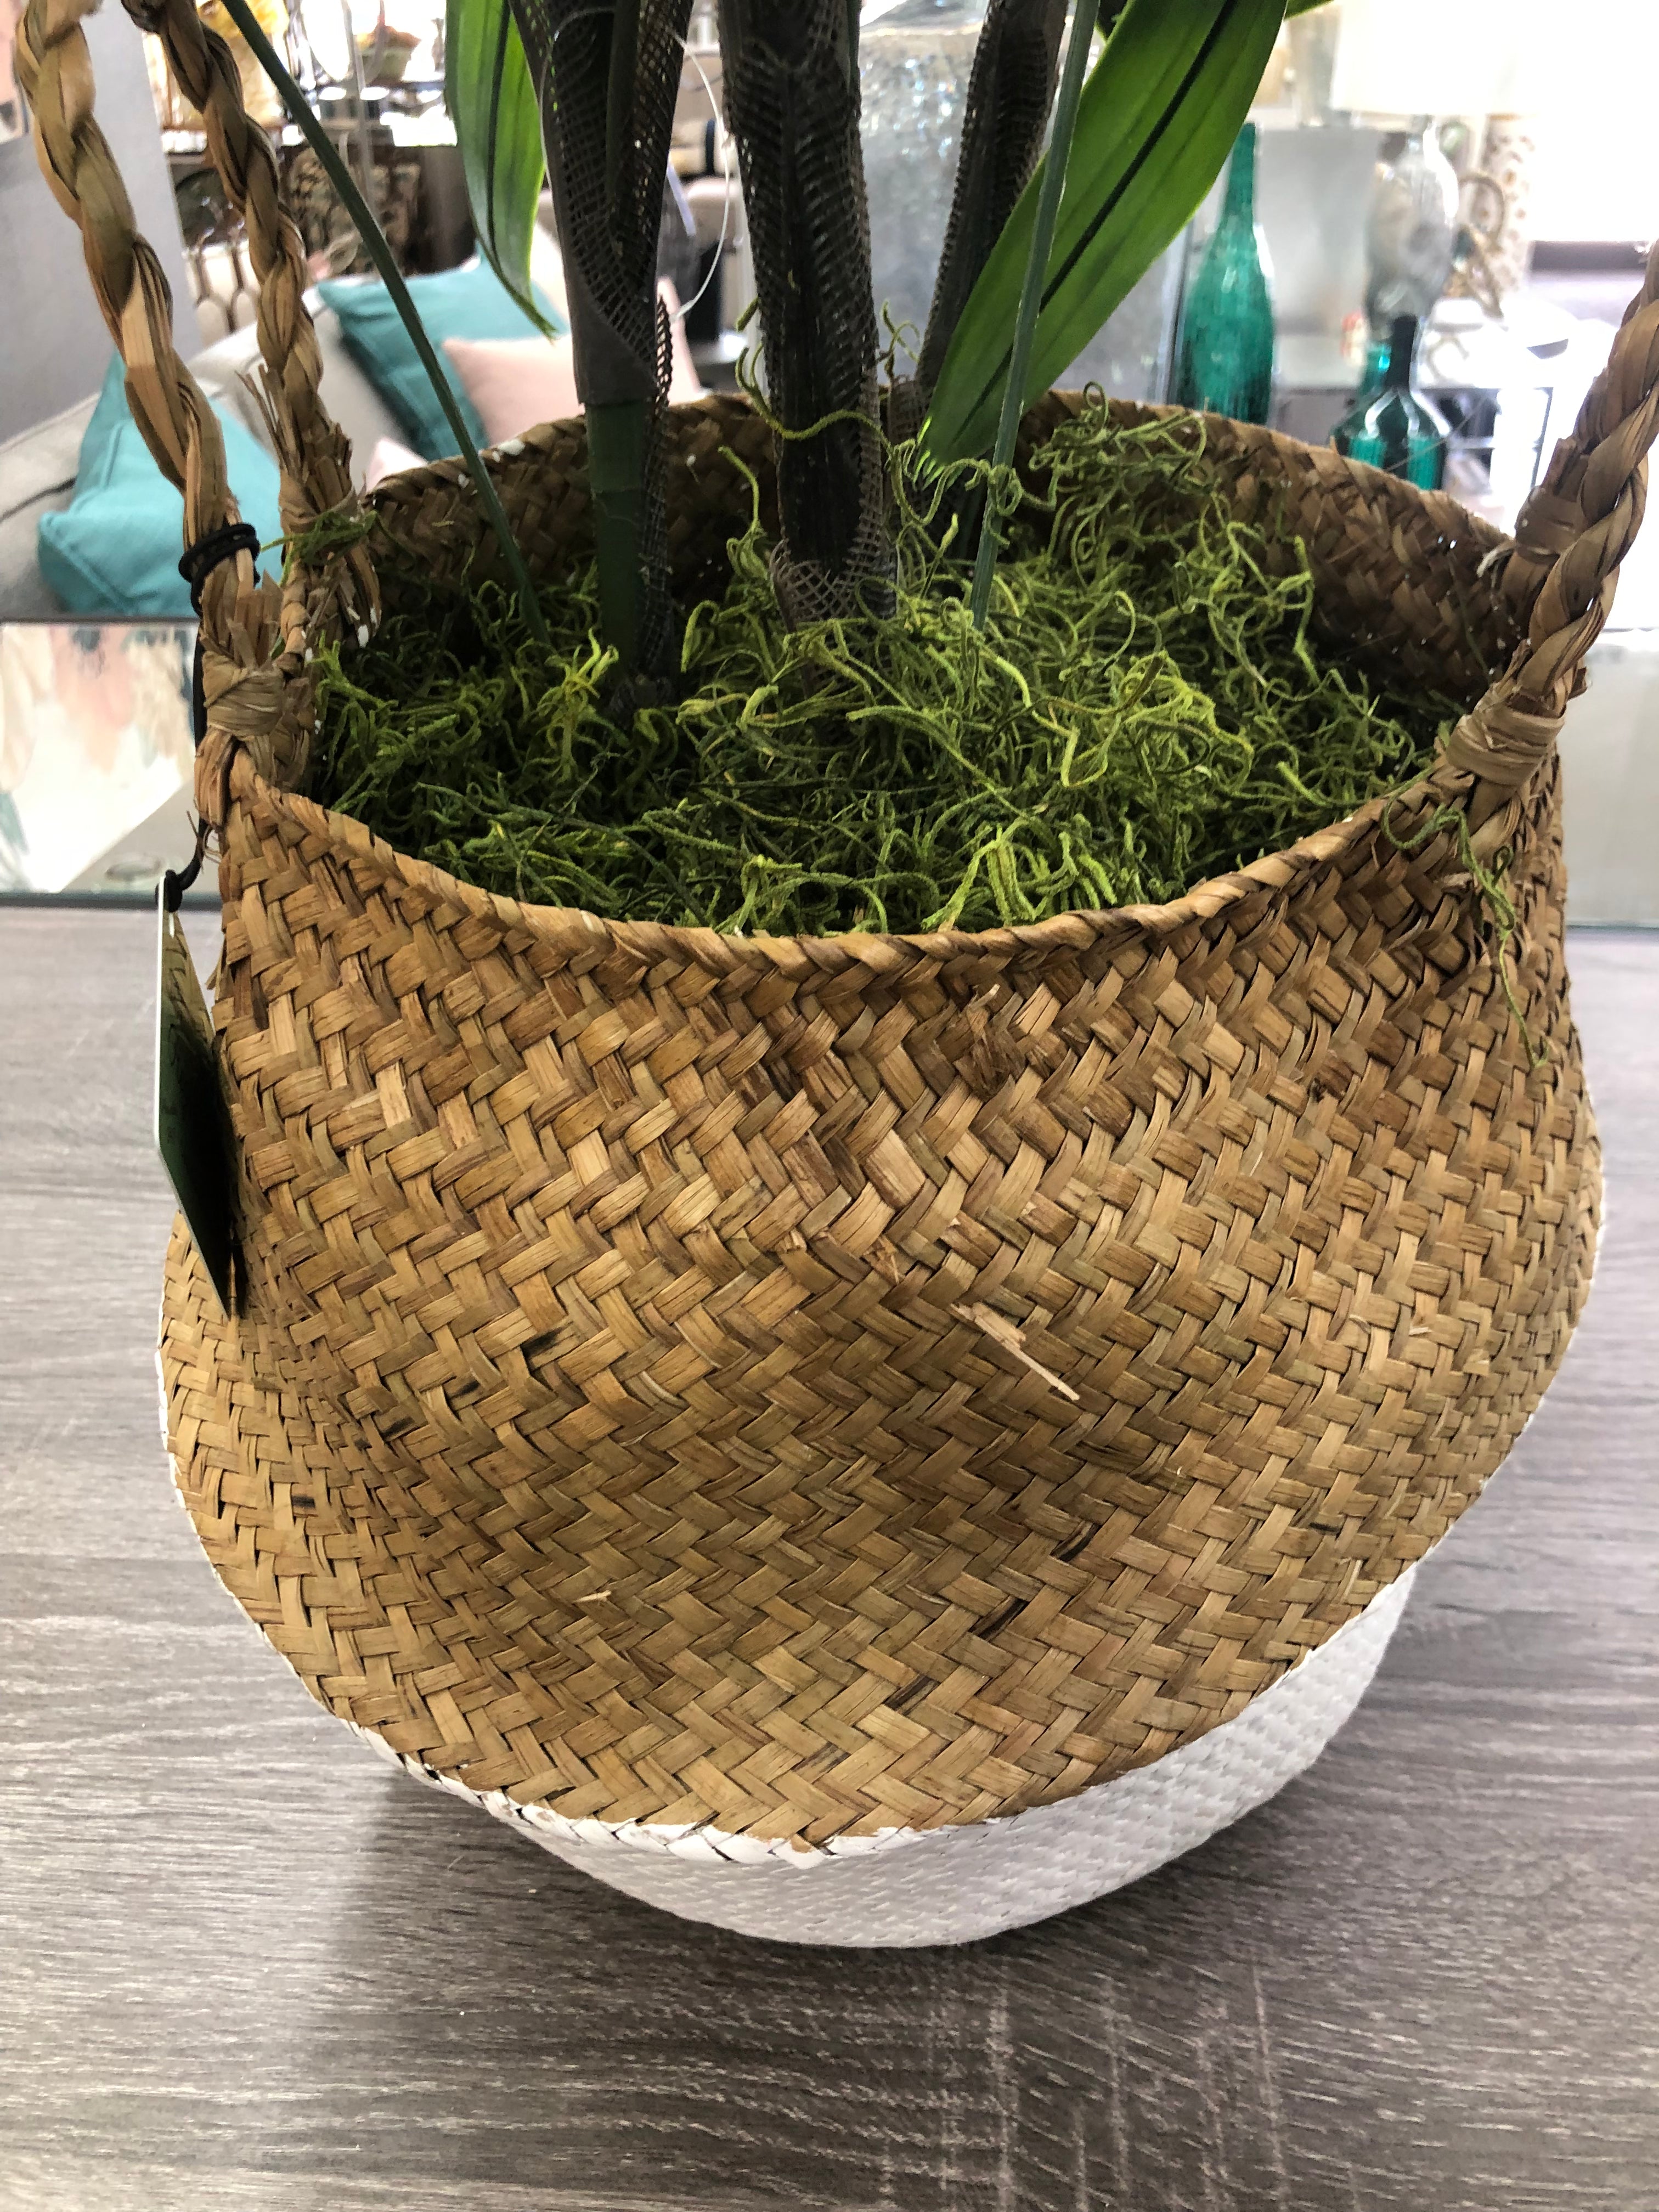 Faux plant in basket